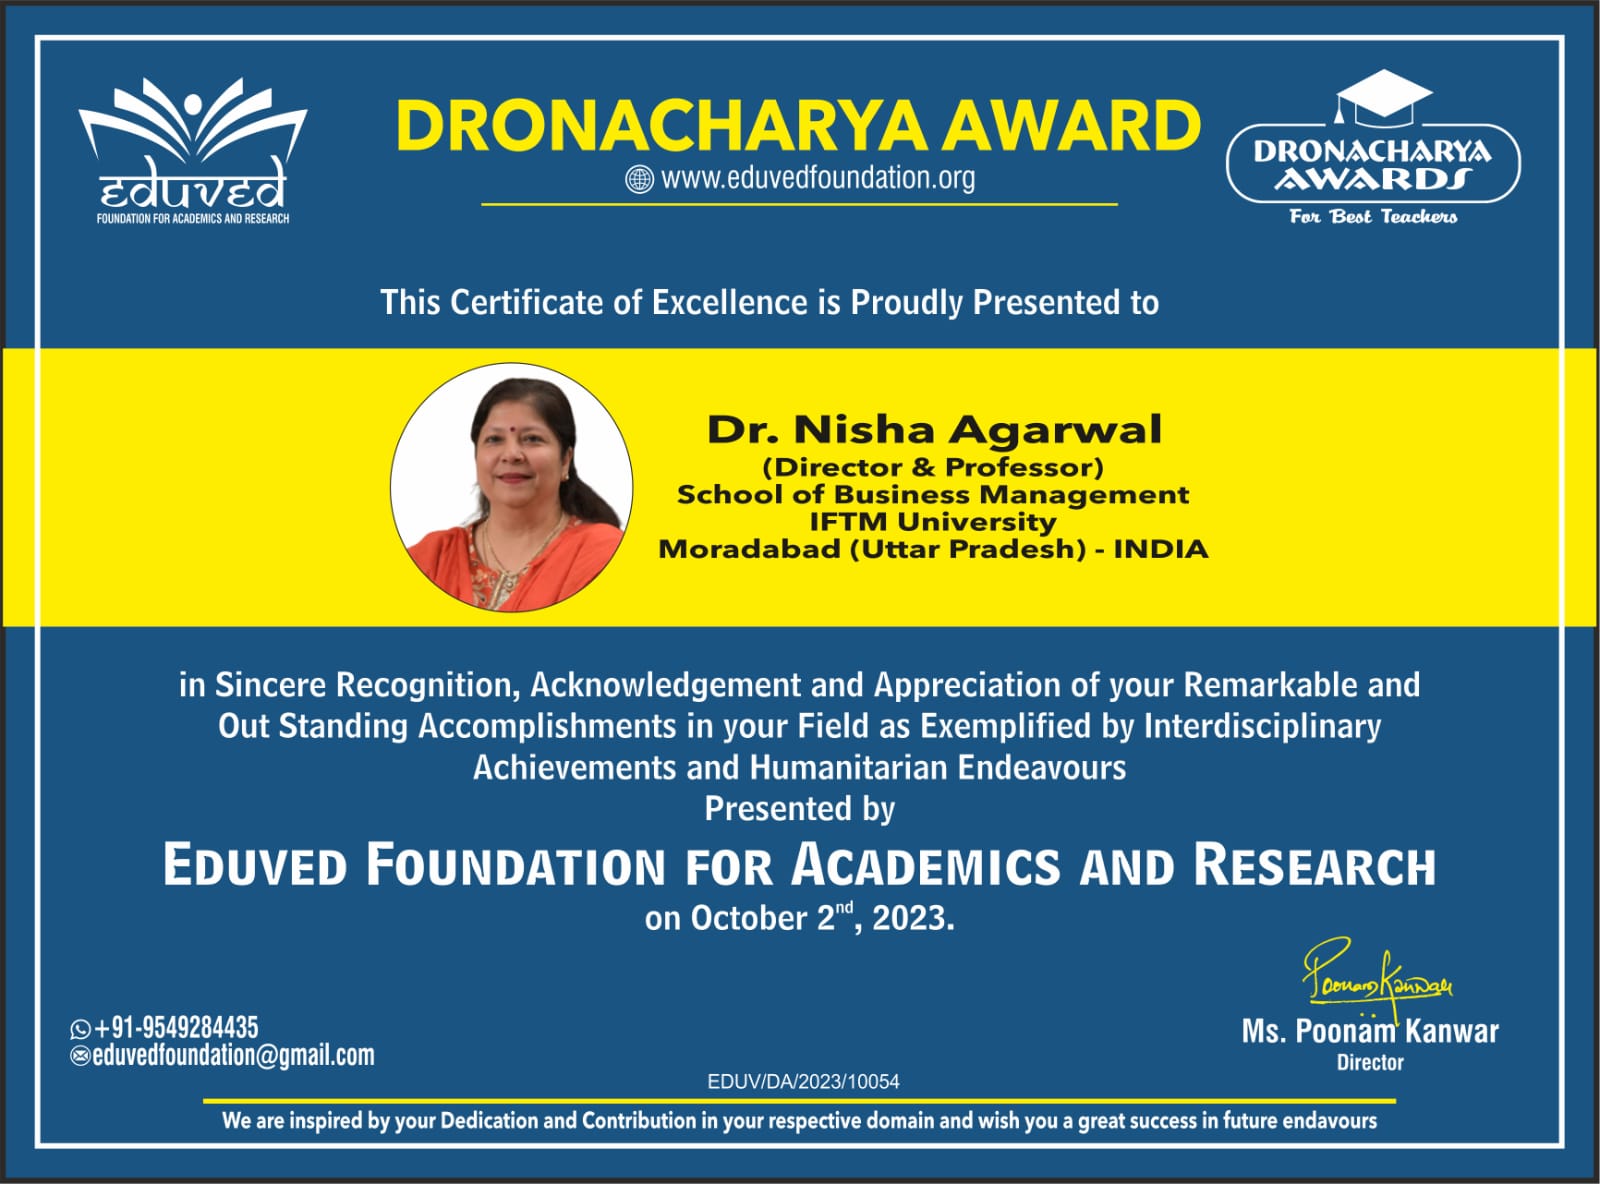 Dronacharya Award 2023